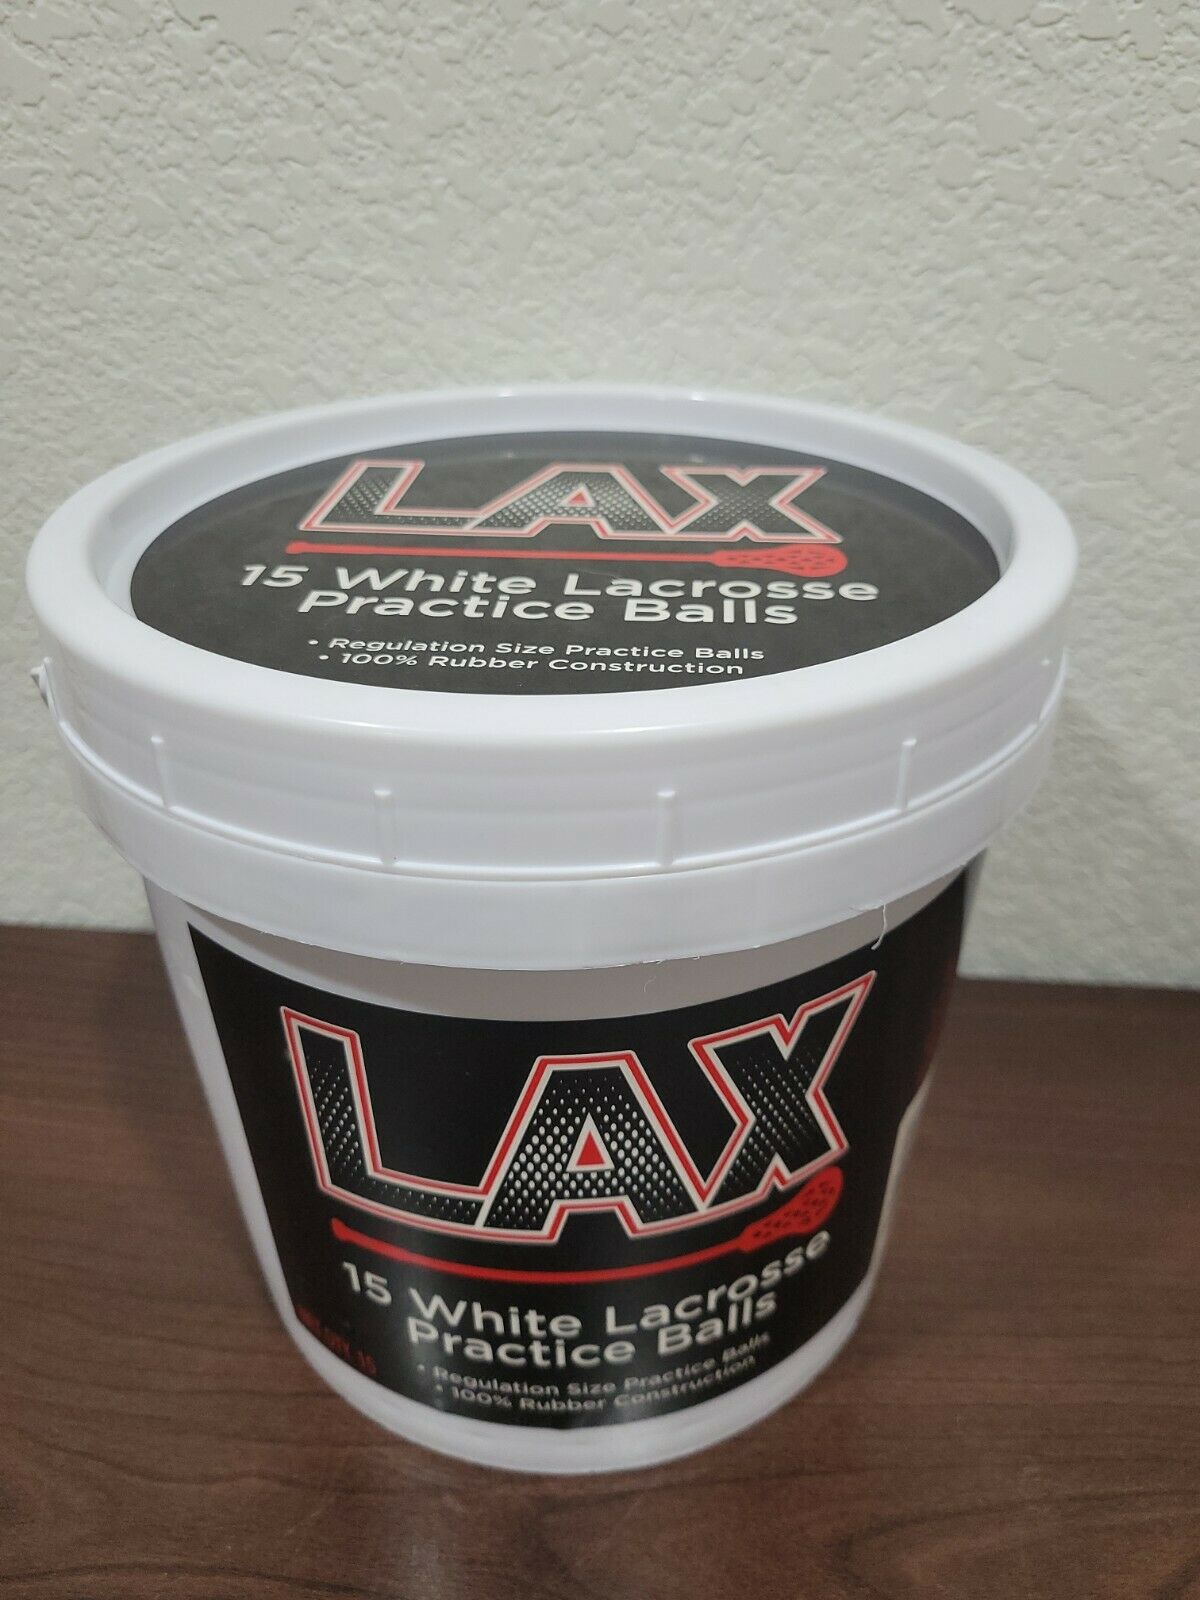 Lax Gadgets Soft Lacrosse Practice Balls, 15 Pack, White